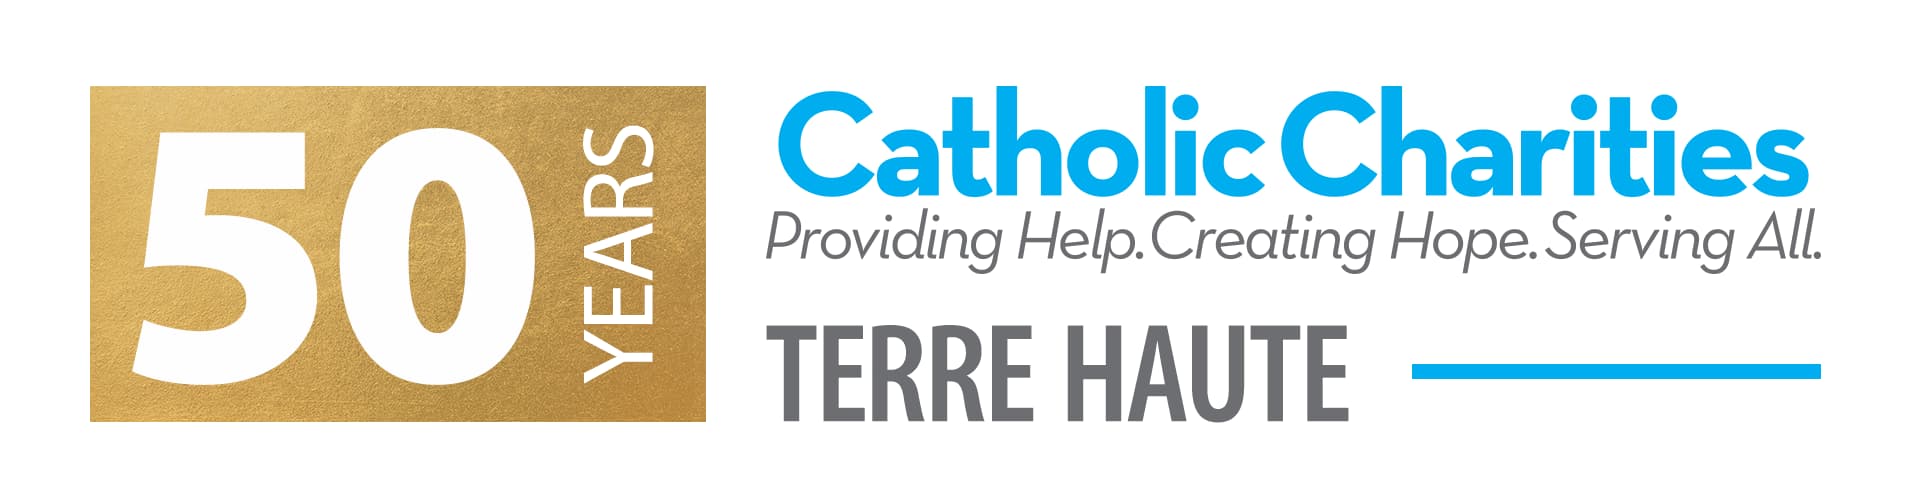 Image for Catholic Charities Terre Haute